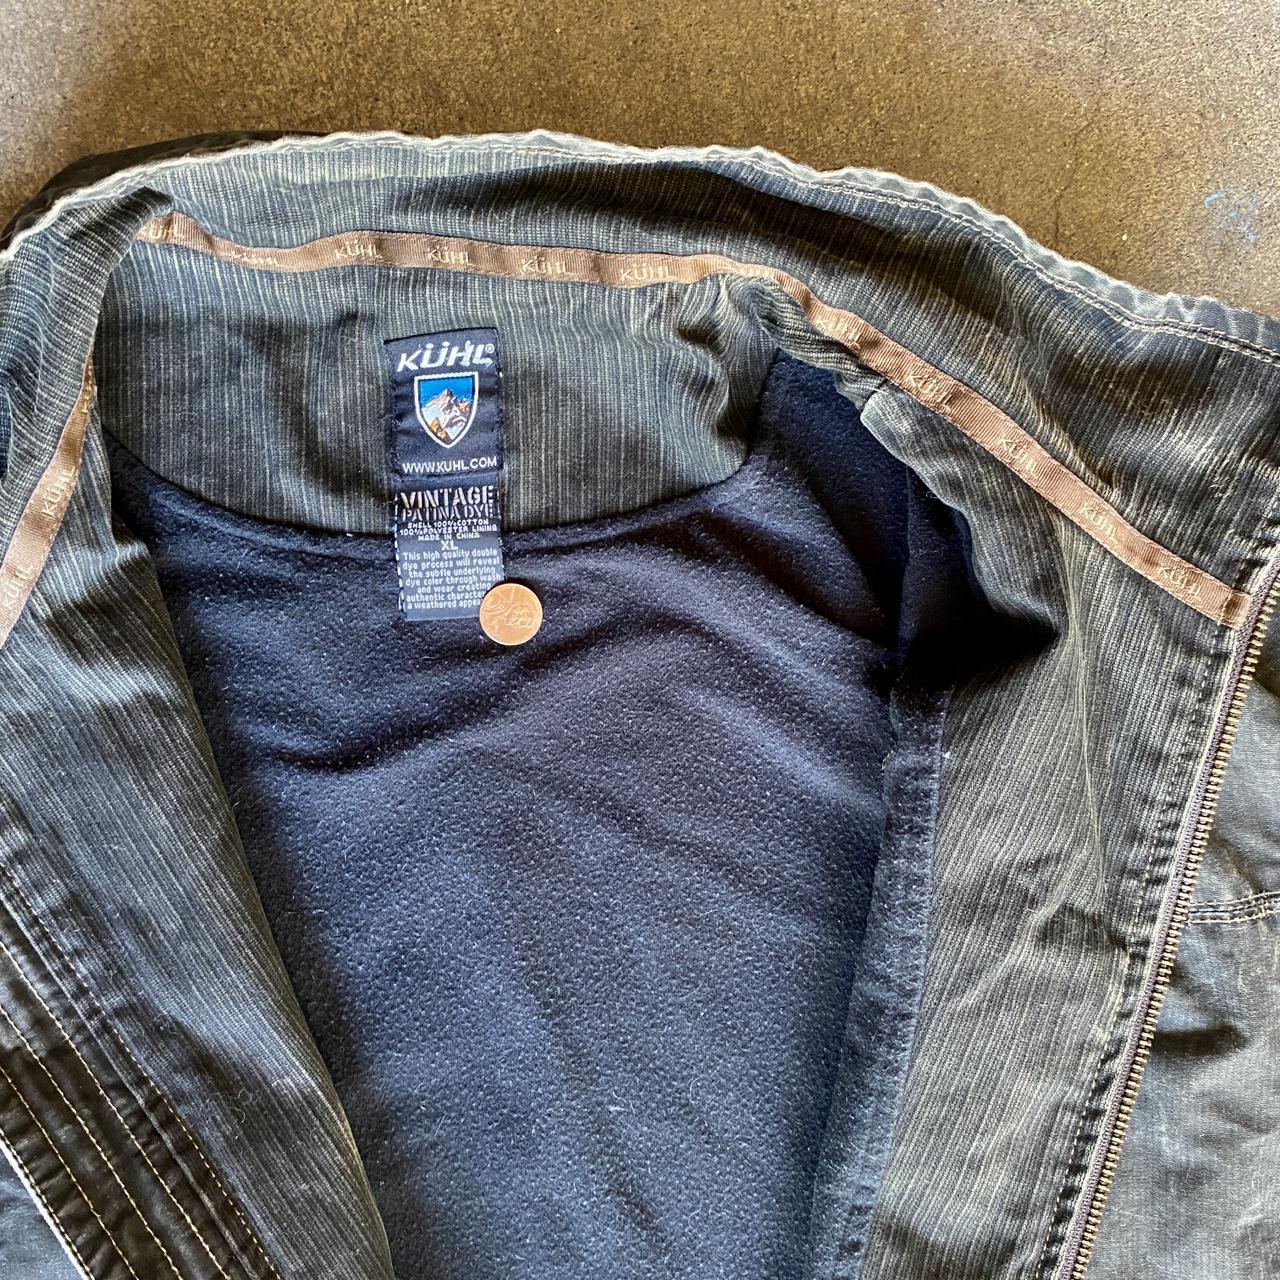 Vintage Patina Dye Kuhl Jacket, Extremely durable and